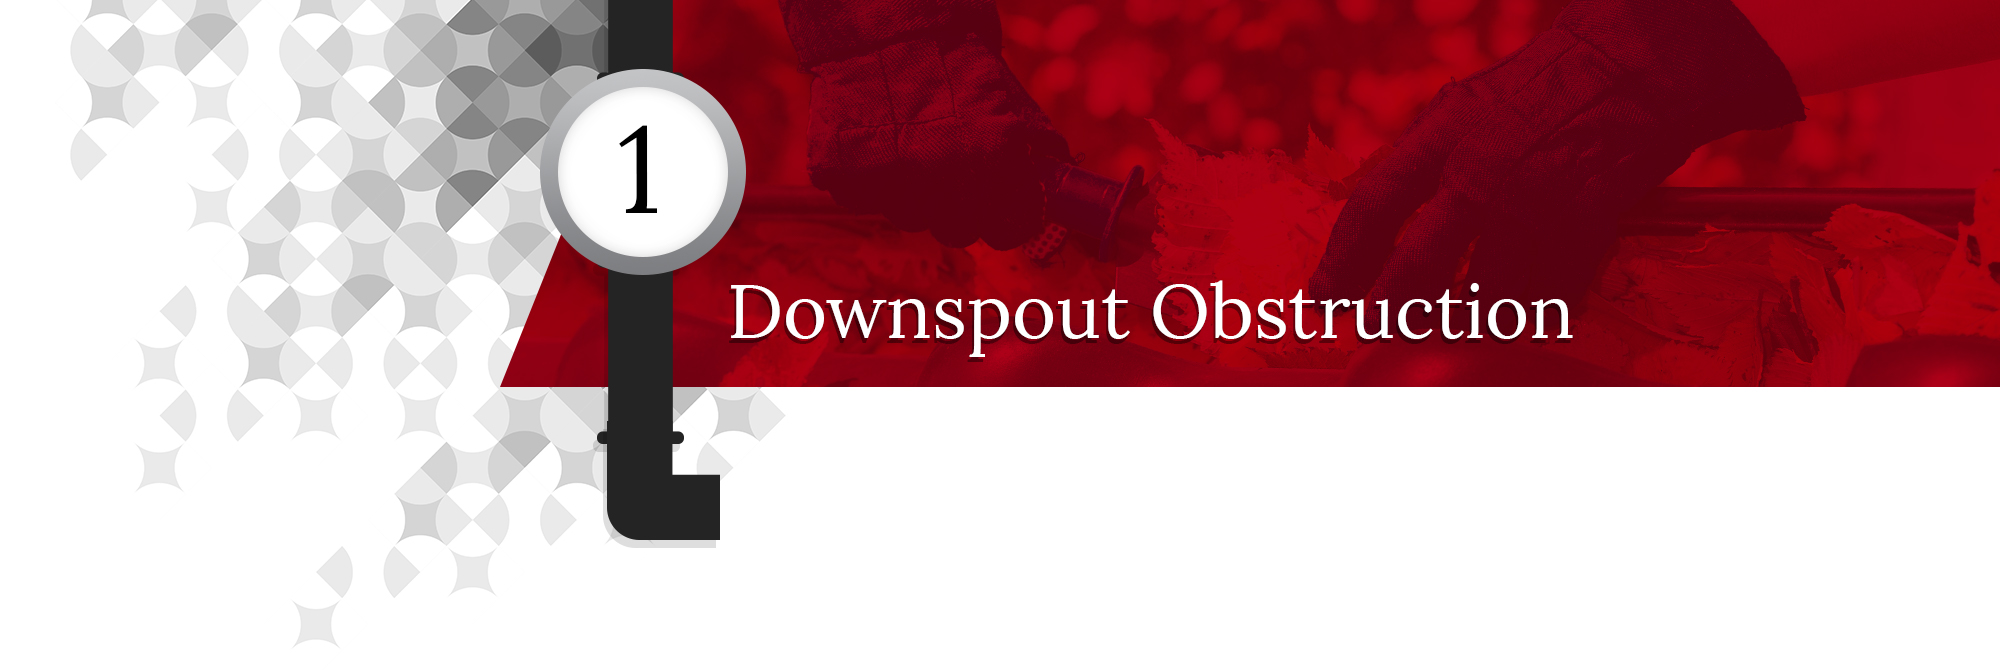 Downspout-Obstruction-5fbb47315b20c